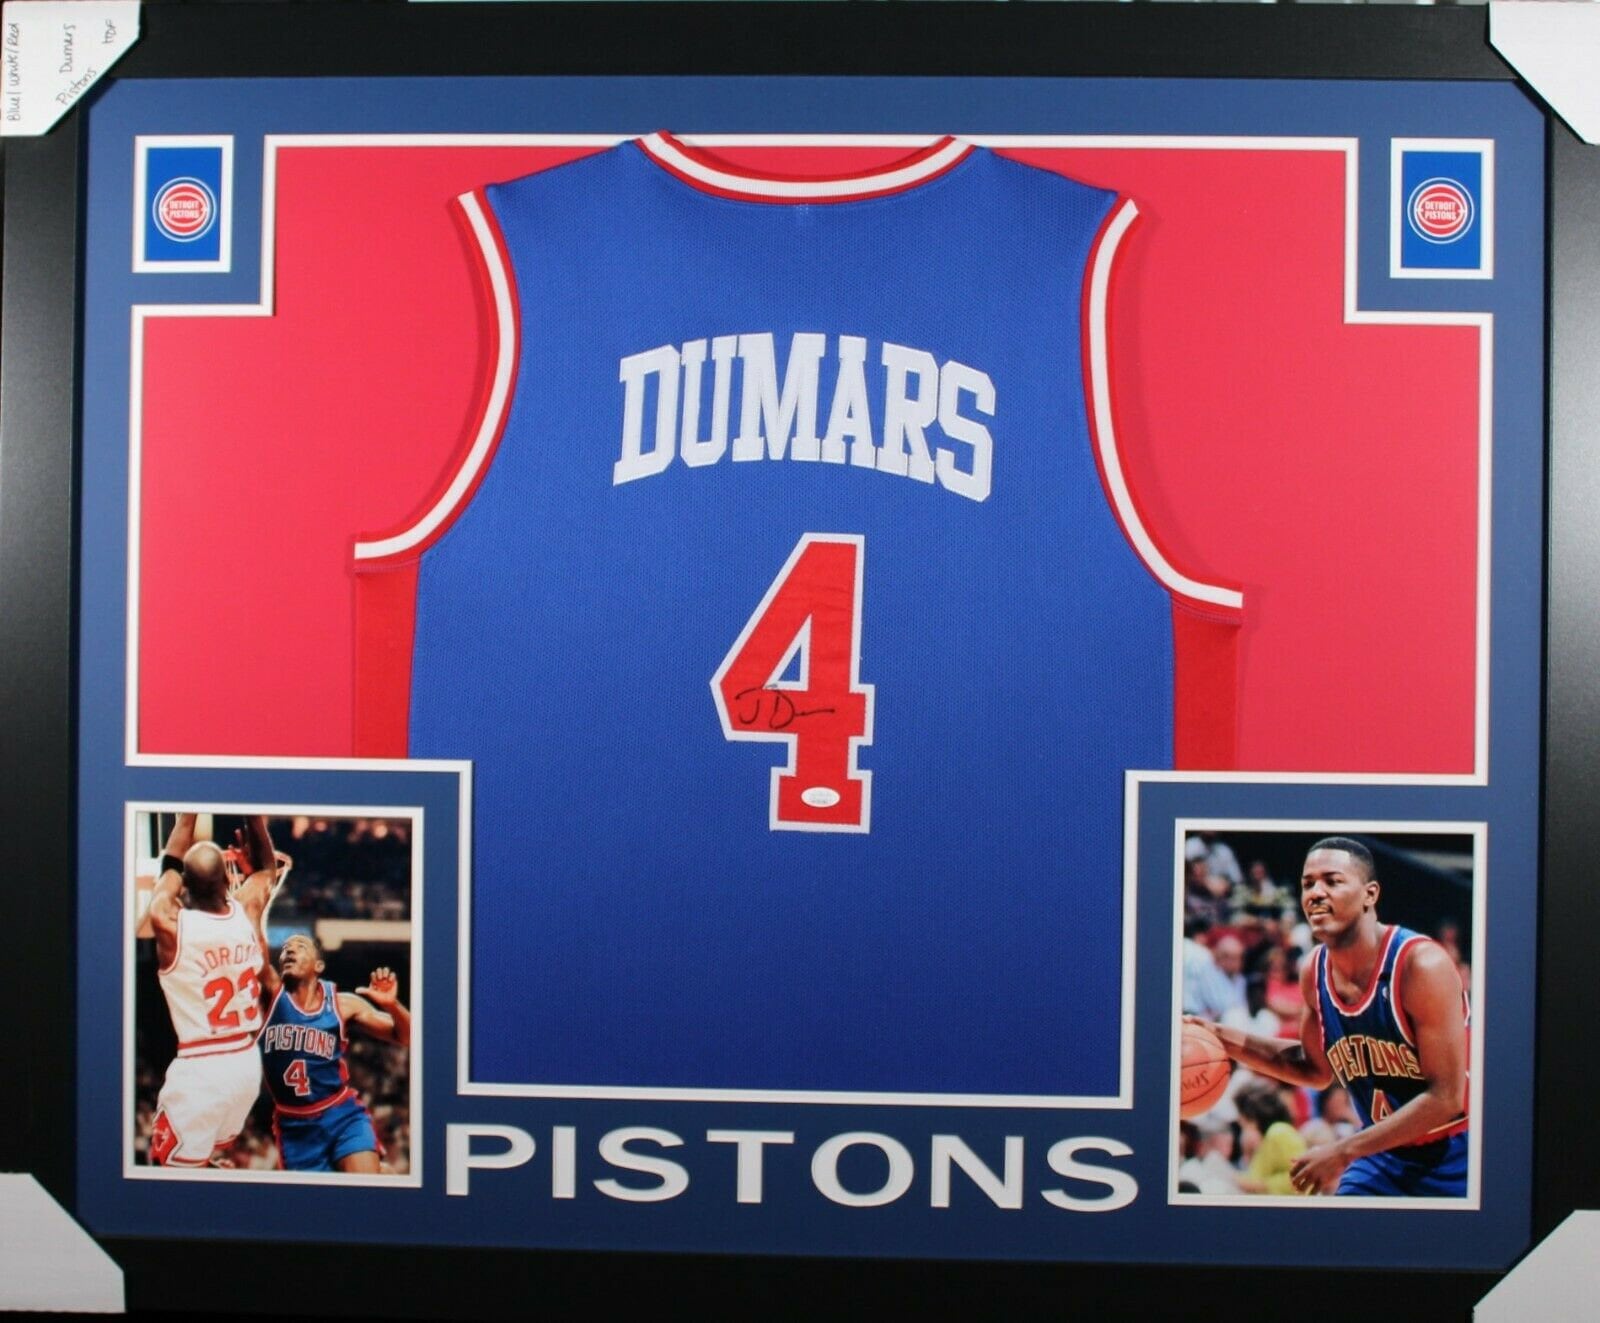 Joe Dumars Superstar Detroit Pistons NBA Action Poster